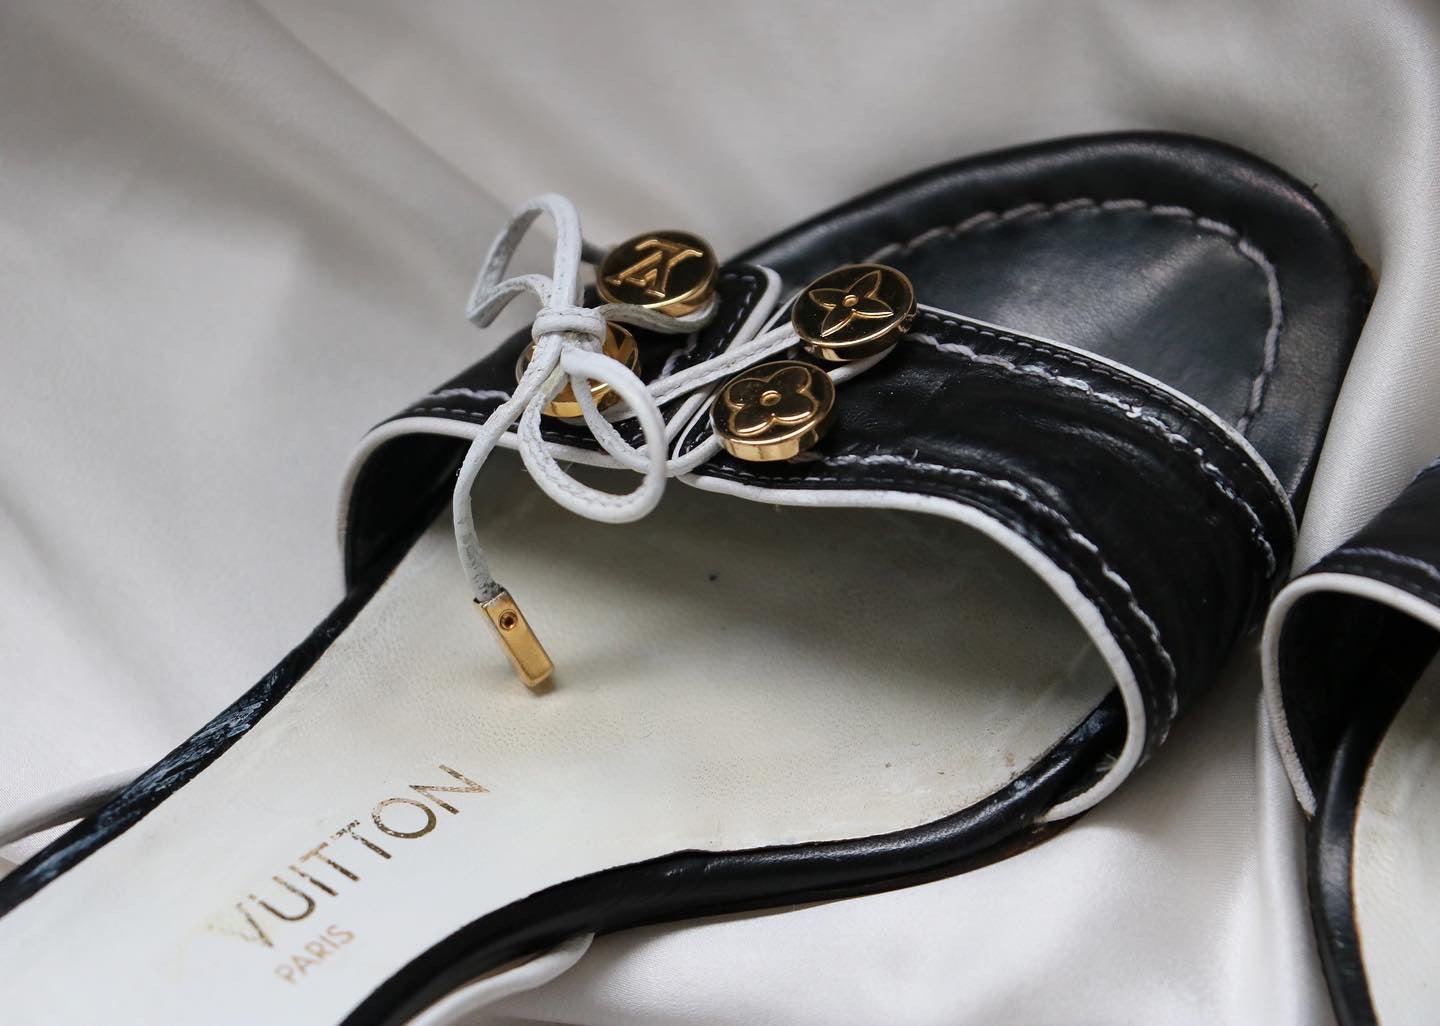 Collier cadenas Louis Vuitton avec double chaîne